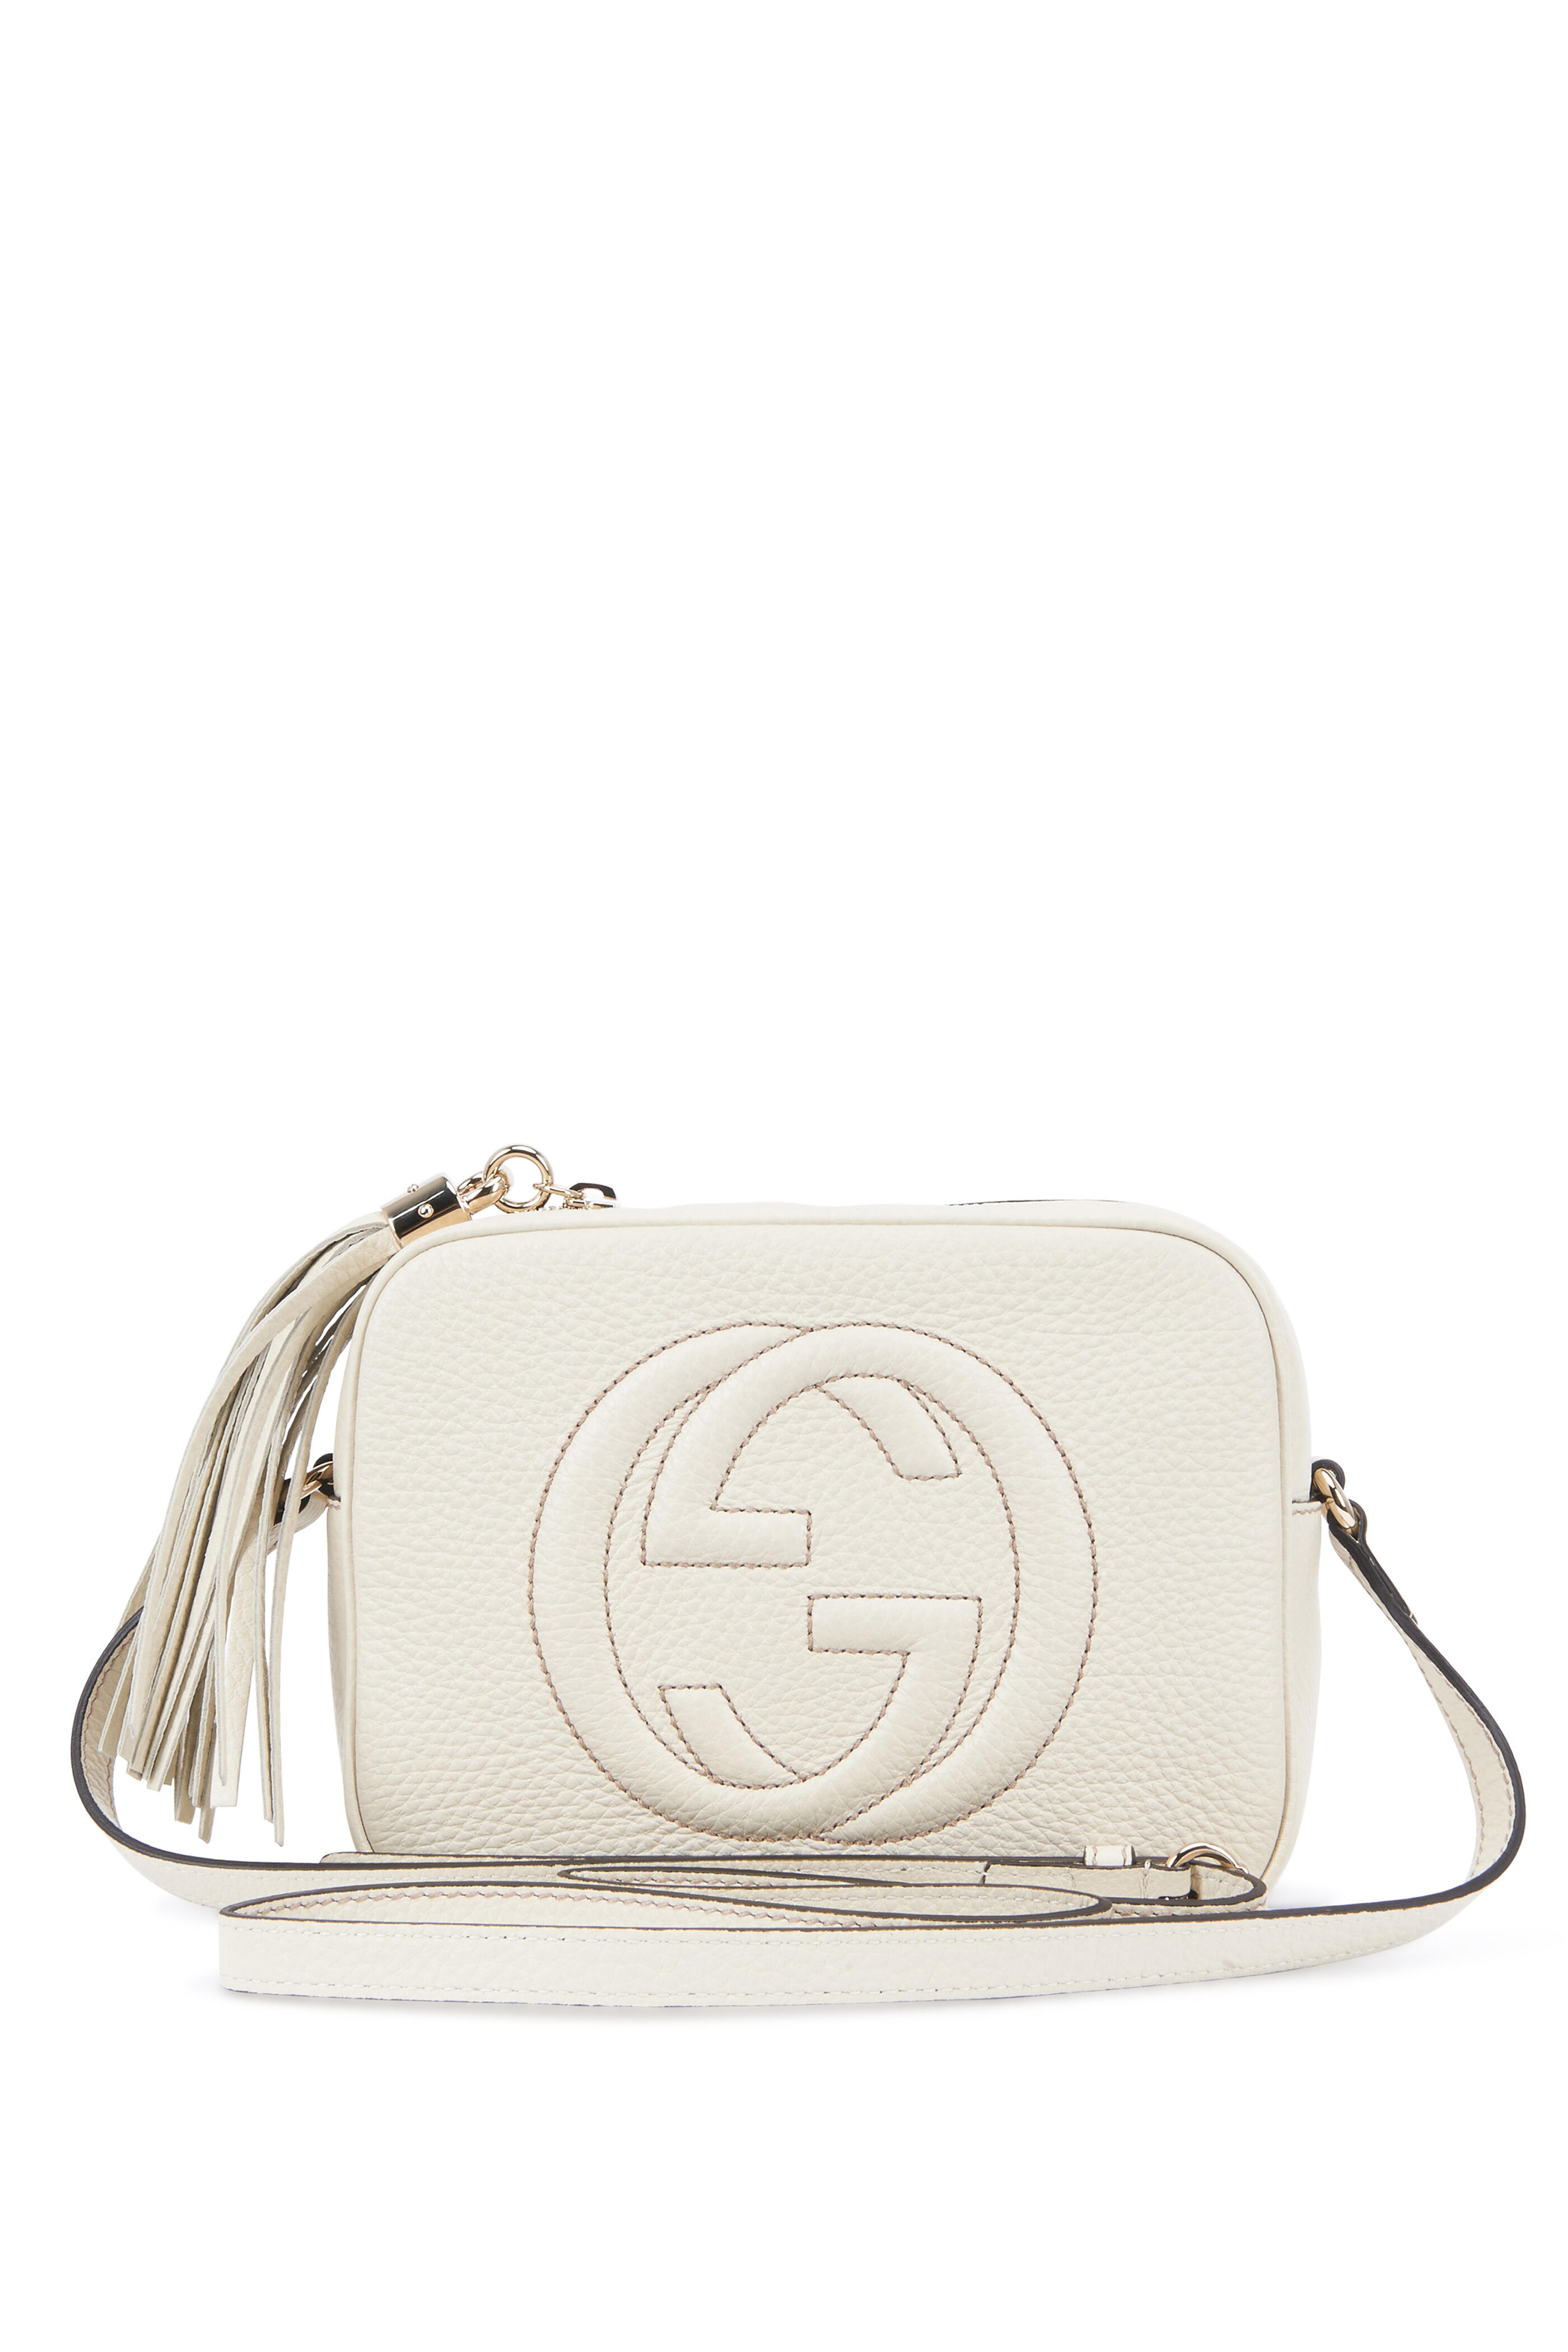 Gucci - Soho Off-White Leather Shoulder Bag